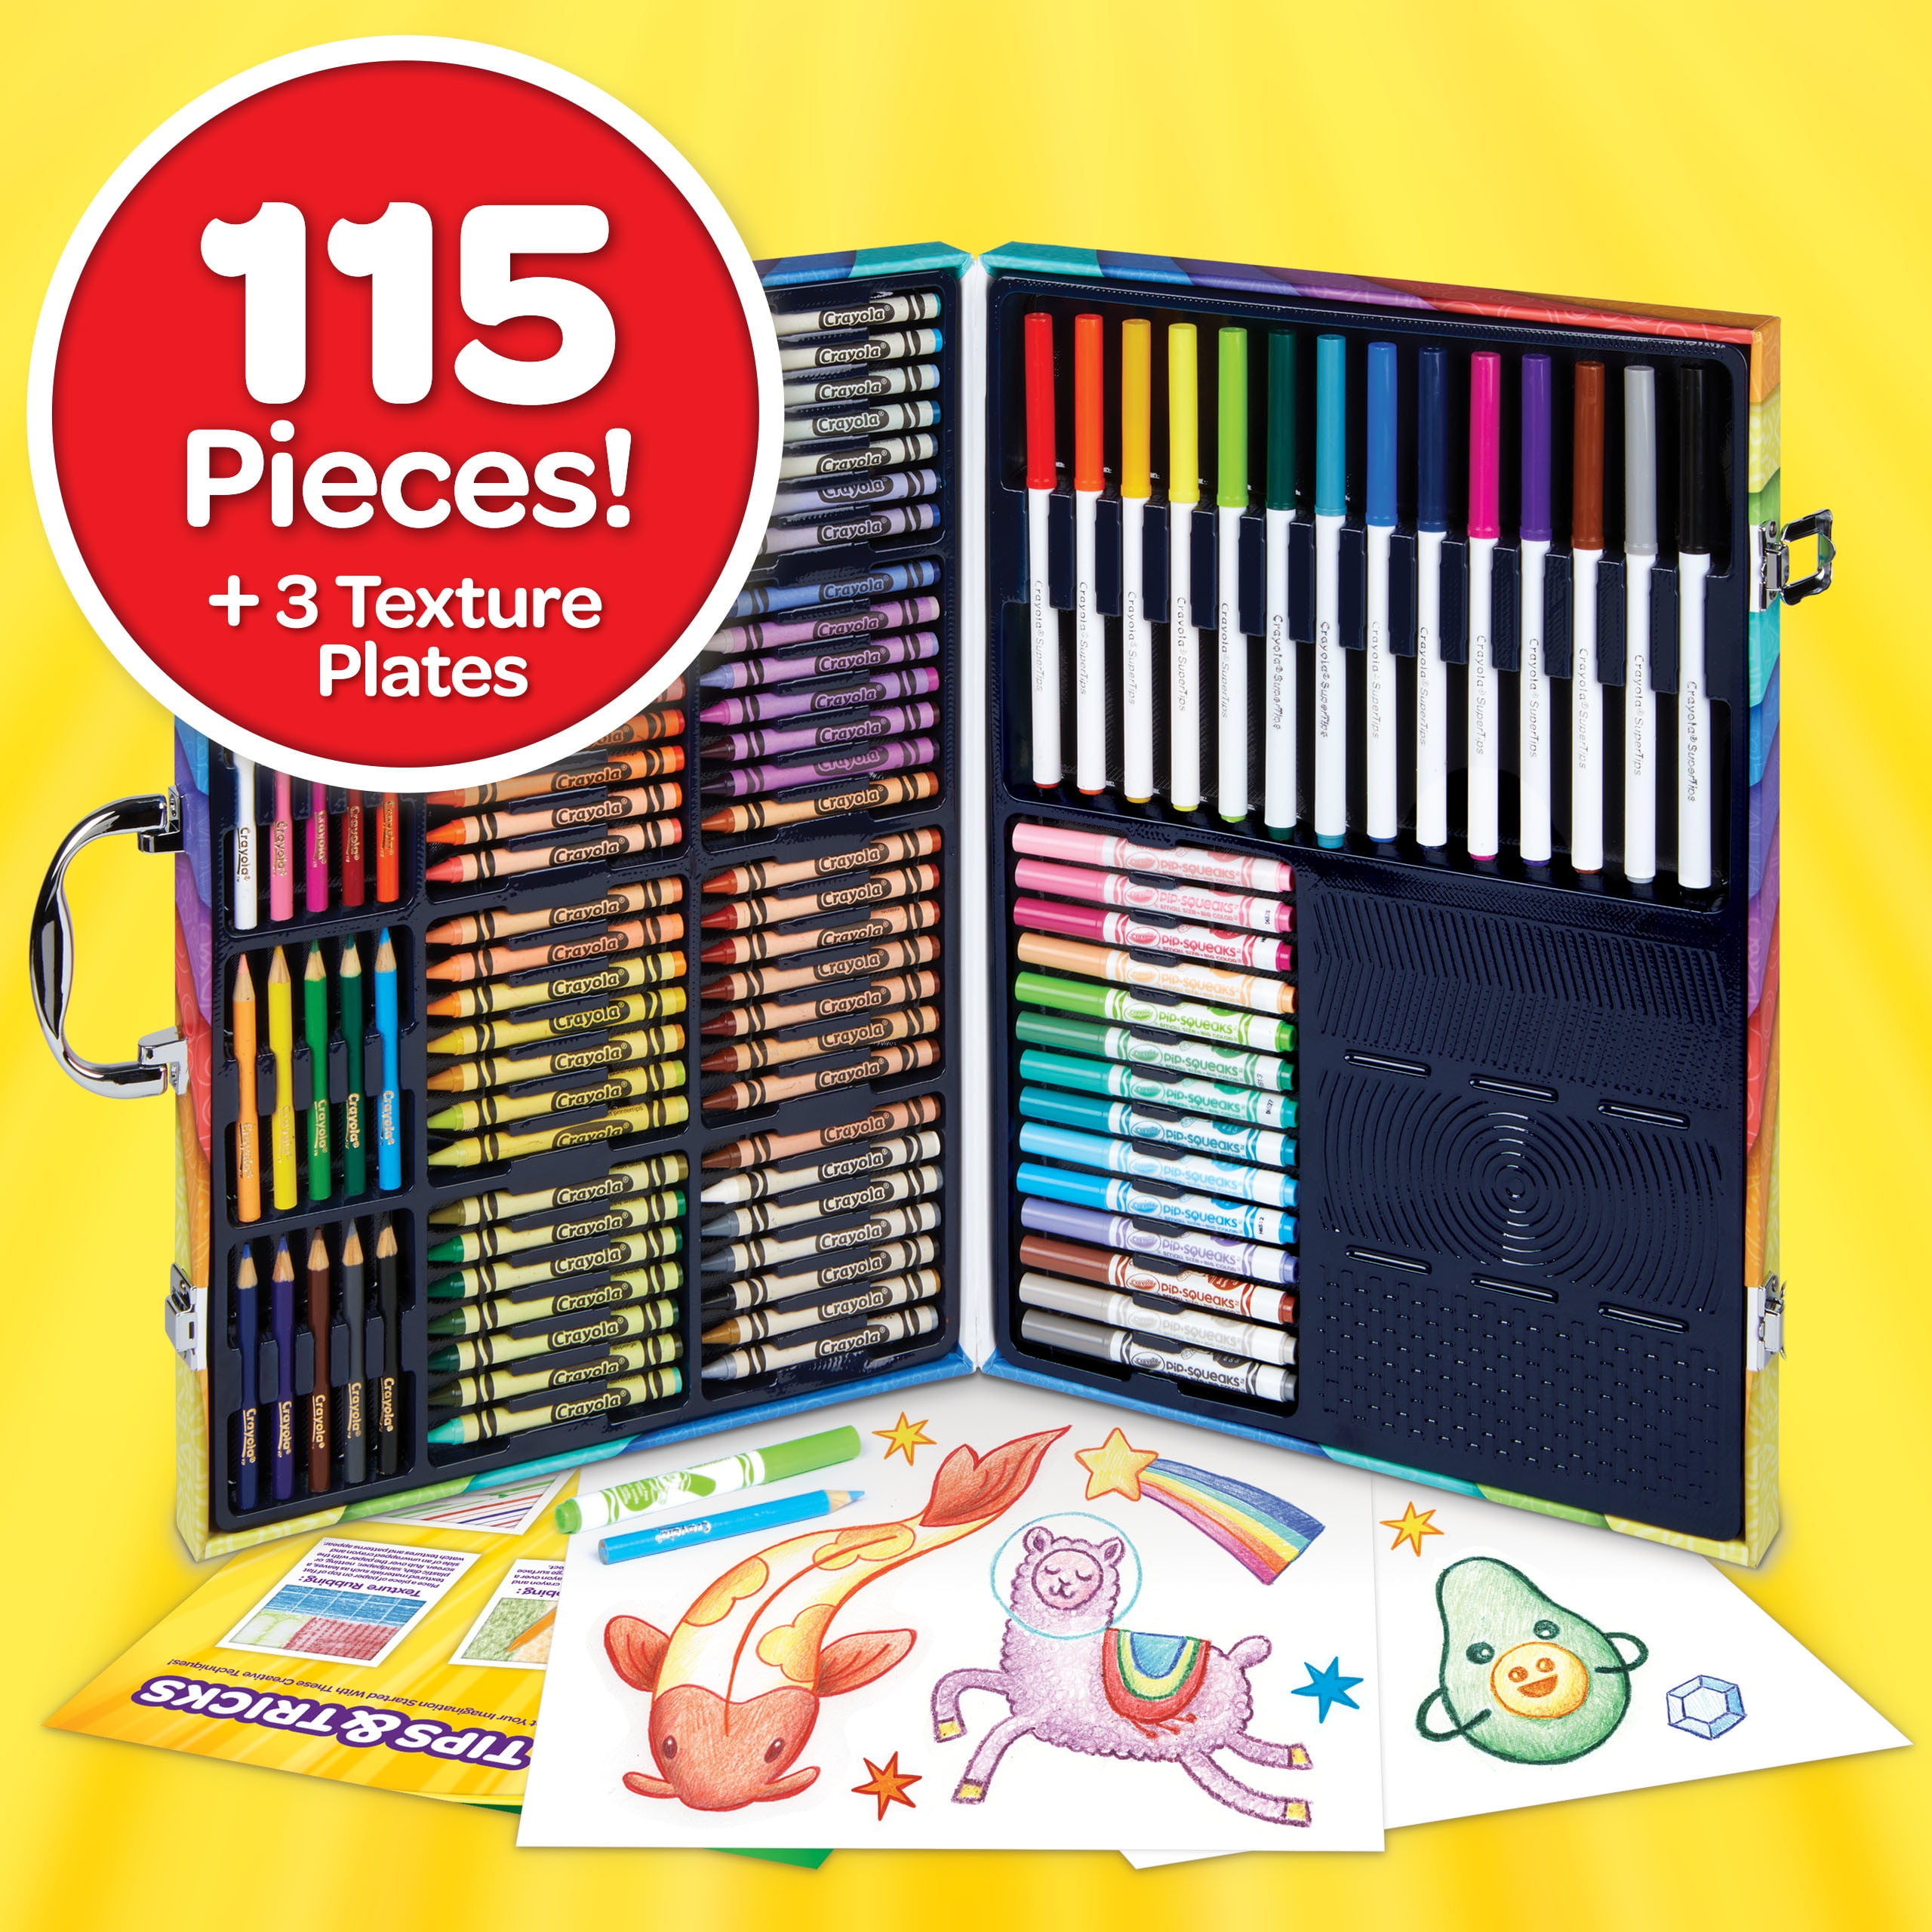 Crayola Sketch and Color Art Coloring Set, Beginner Child, 70 Pieces 